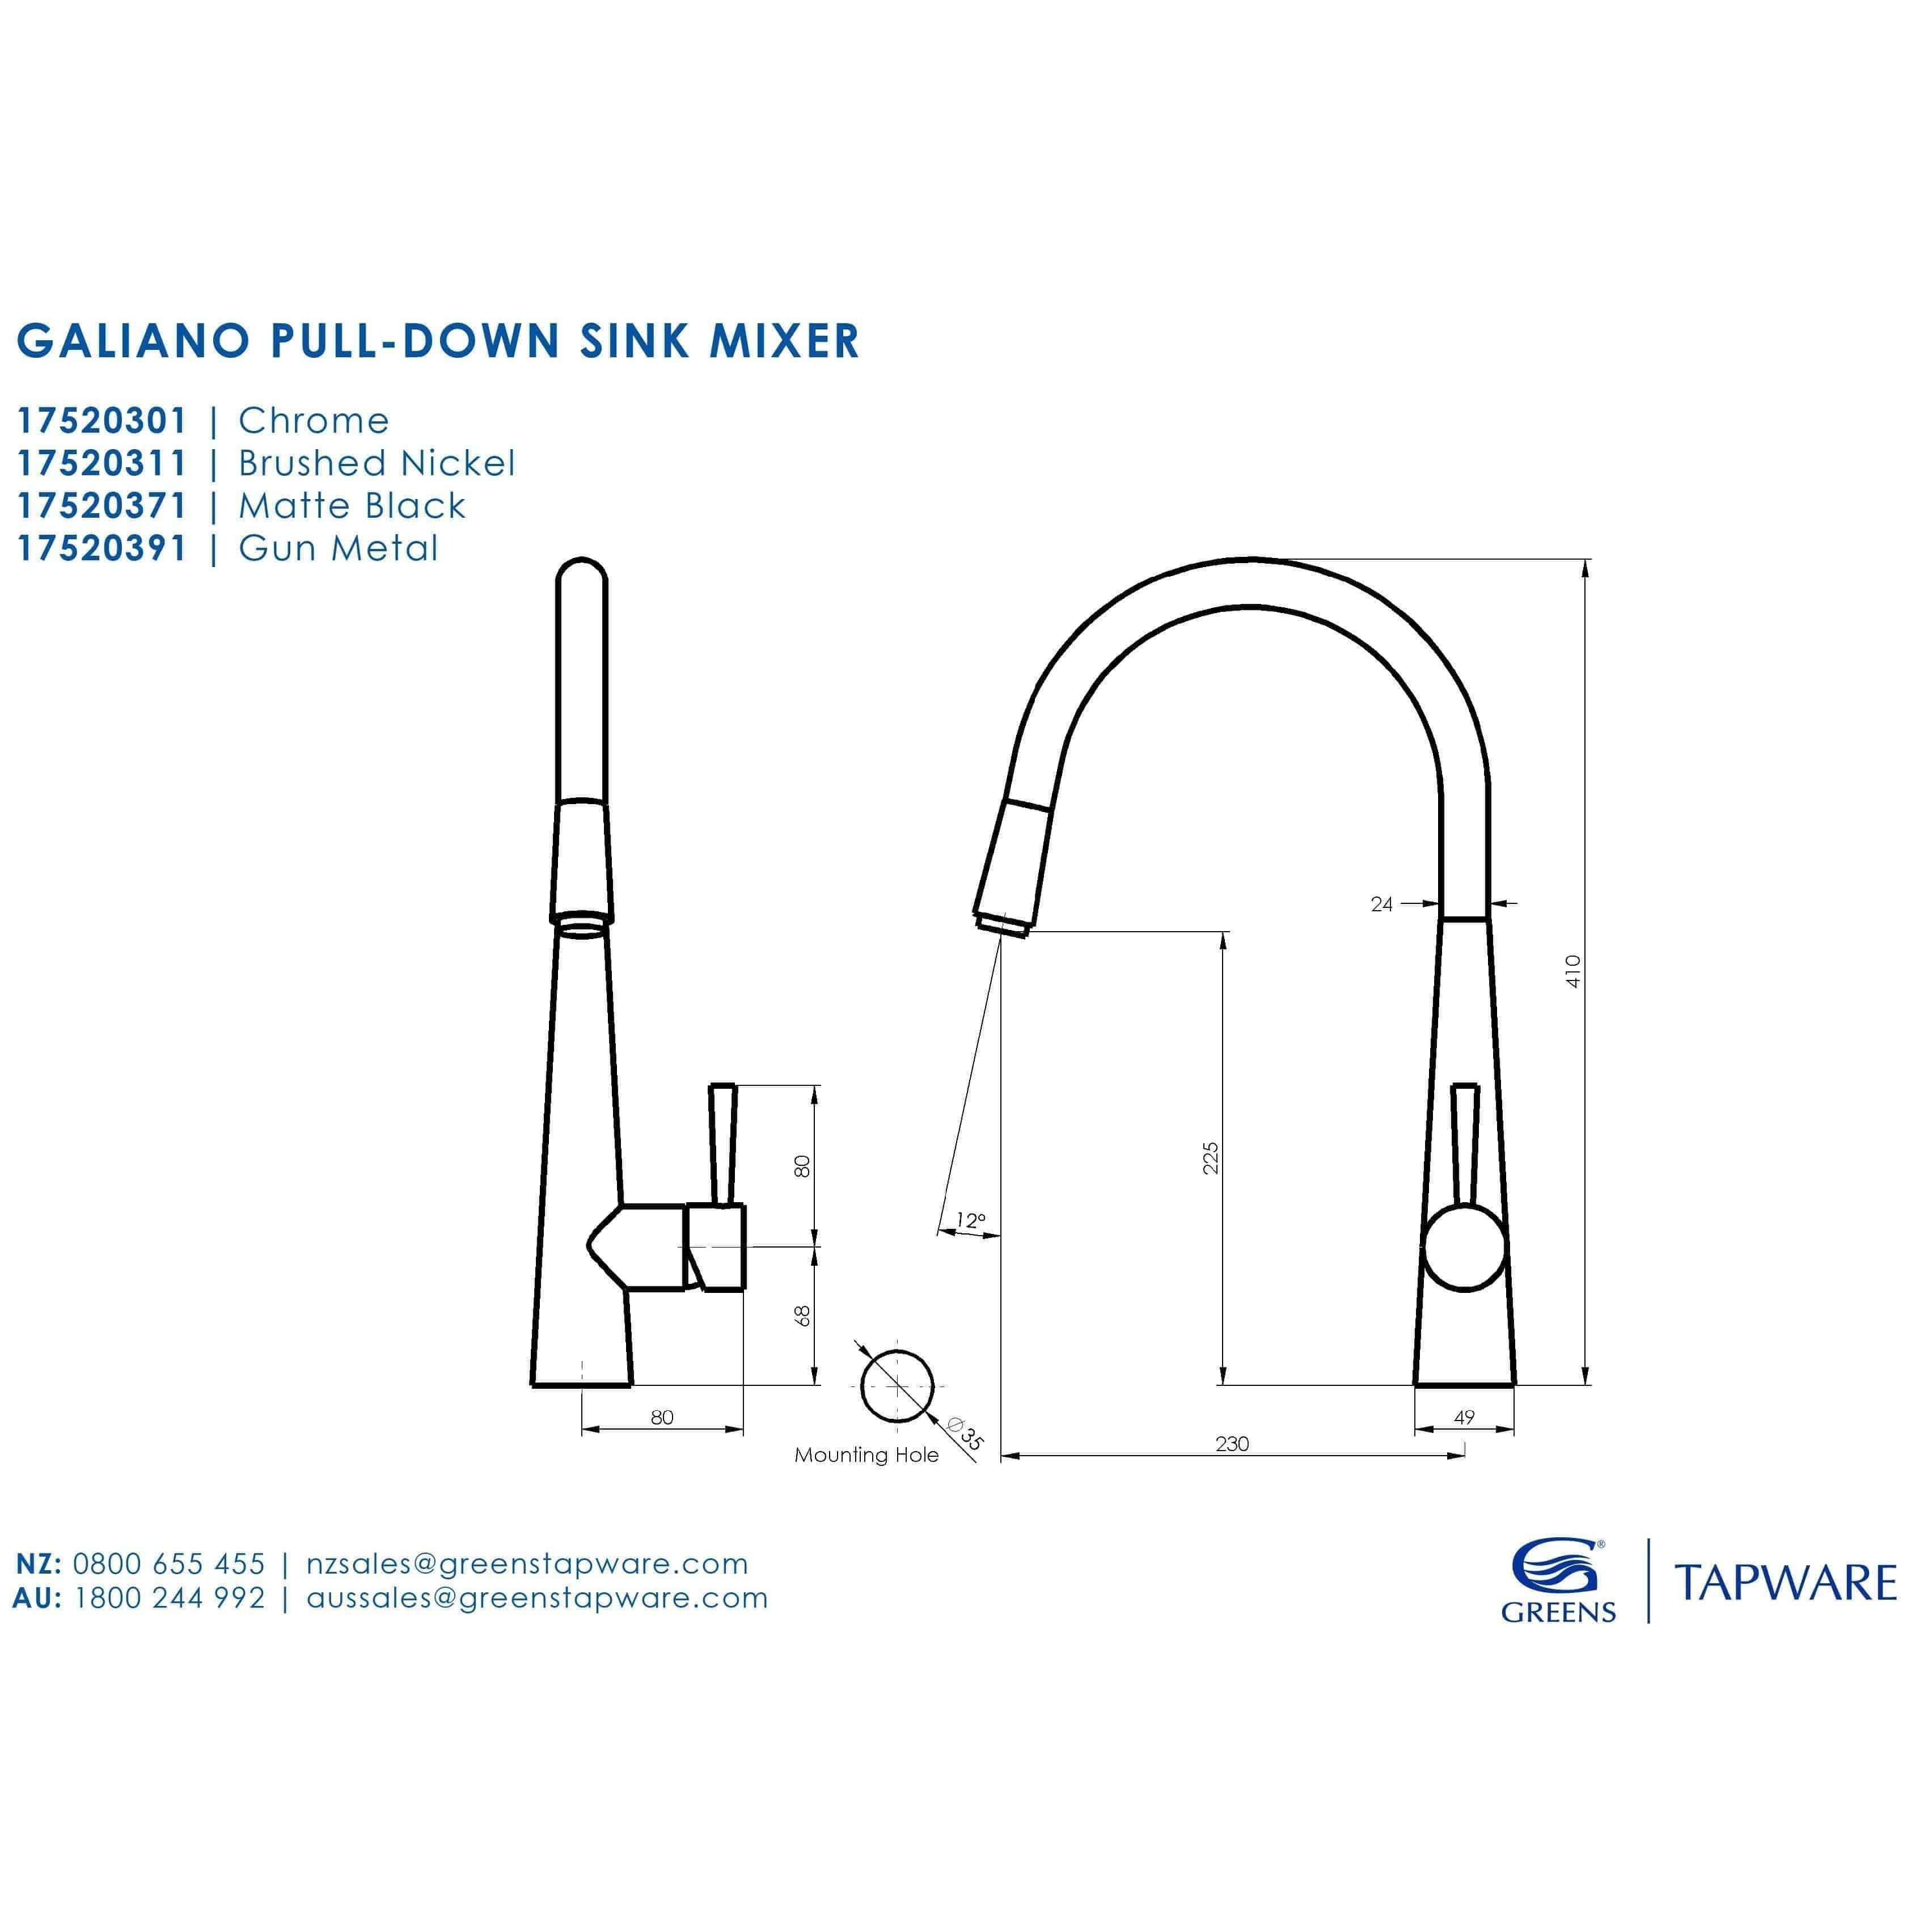 Greens Galiano Pull Down Sink Mixer Gun Metal 17520391 - Burdens Plumbing